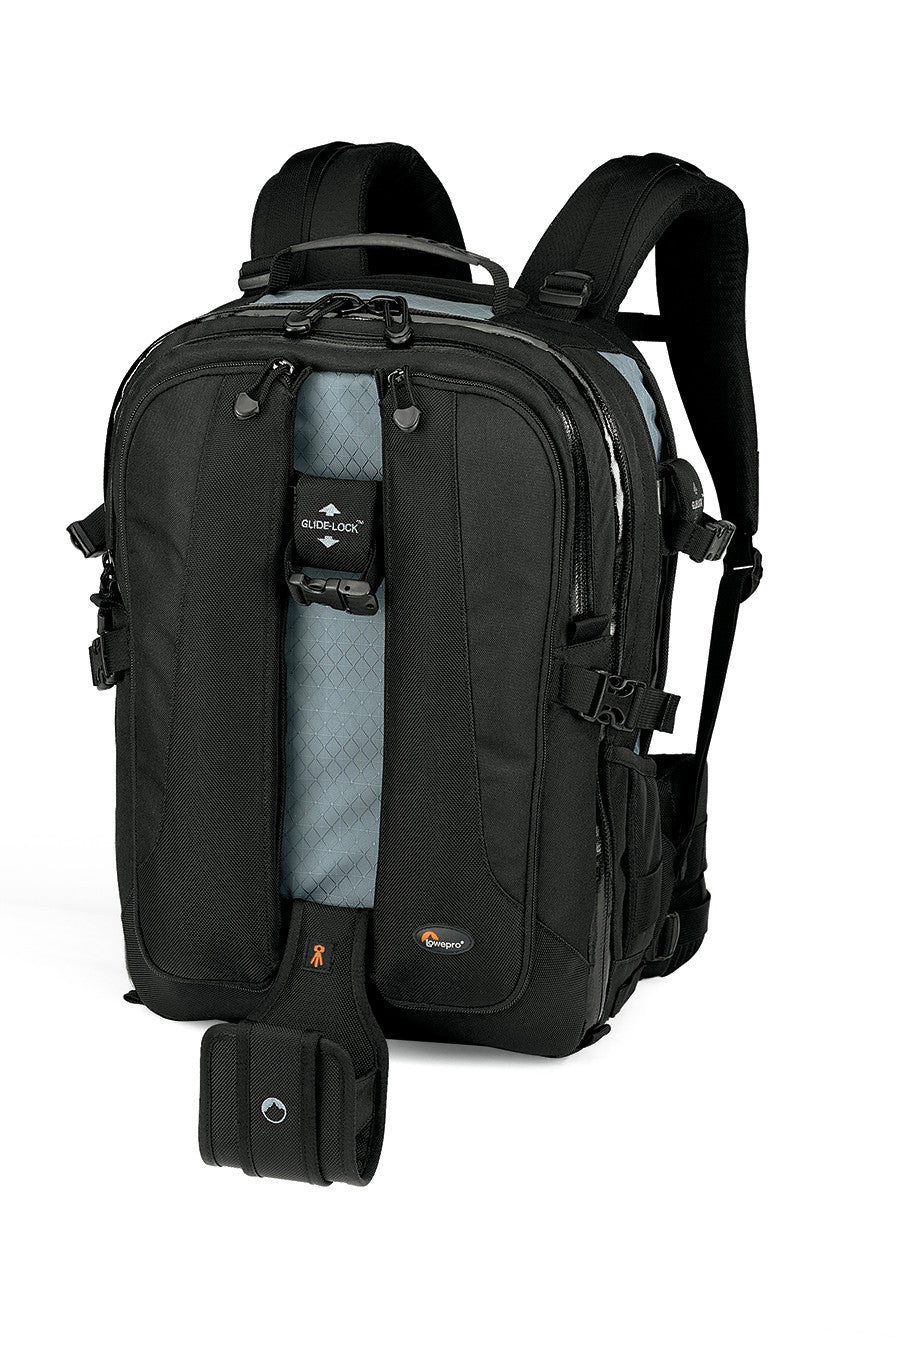 Lowepro Vertex 200 AW Camera and Laptop Backpack (Black), bags backpacks, Lowepro - Pictureline  - 1